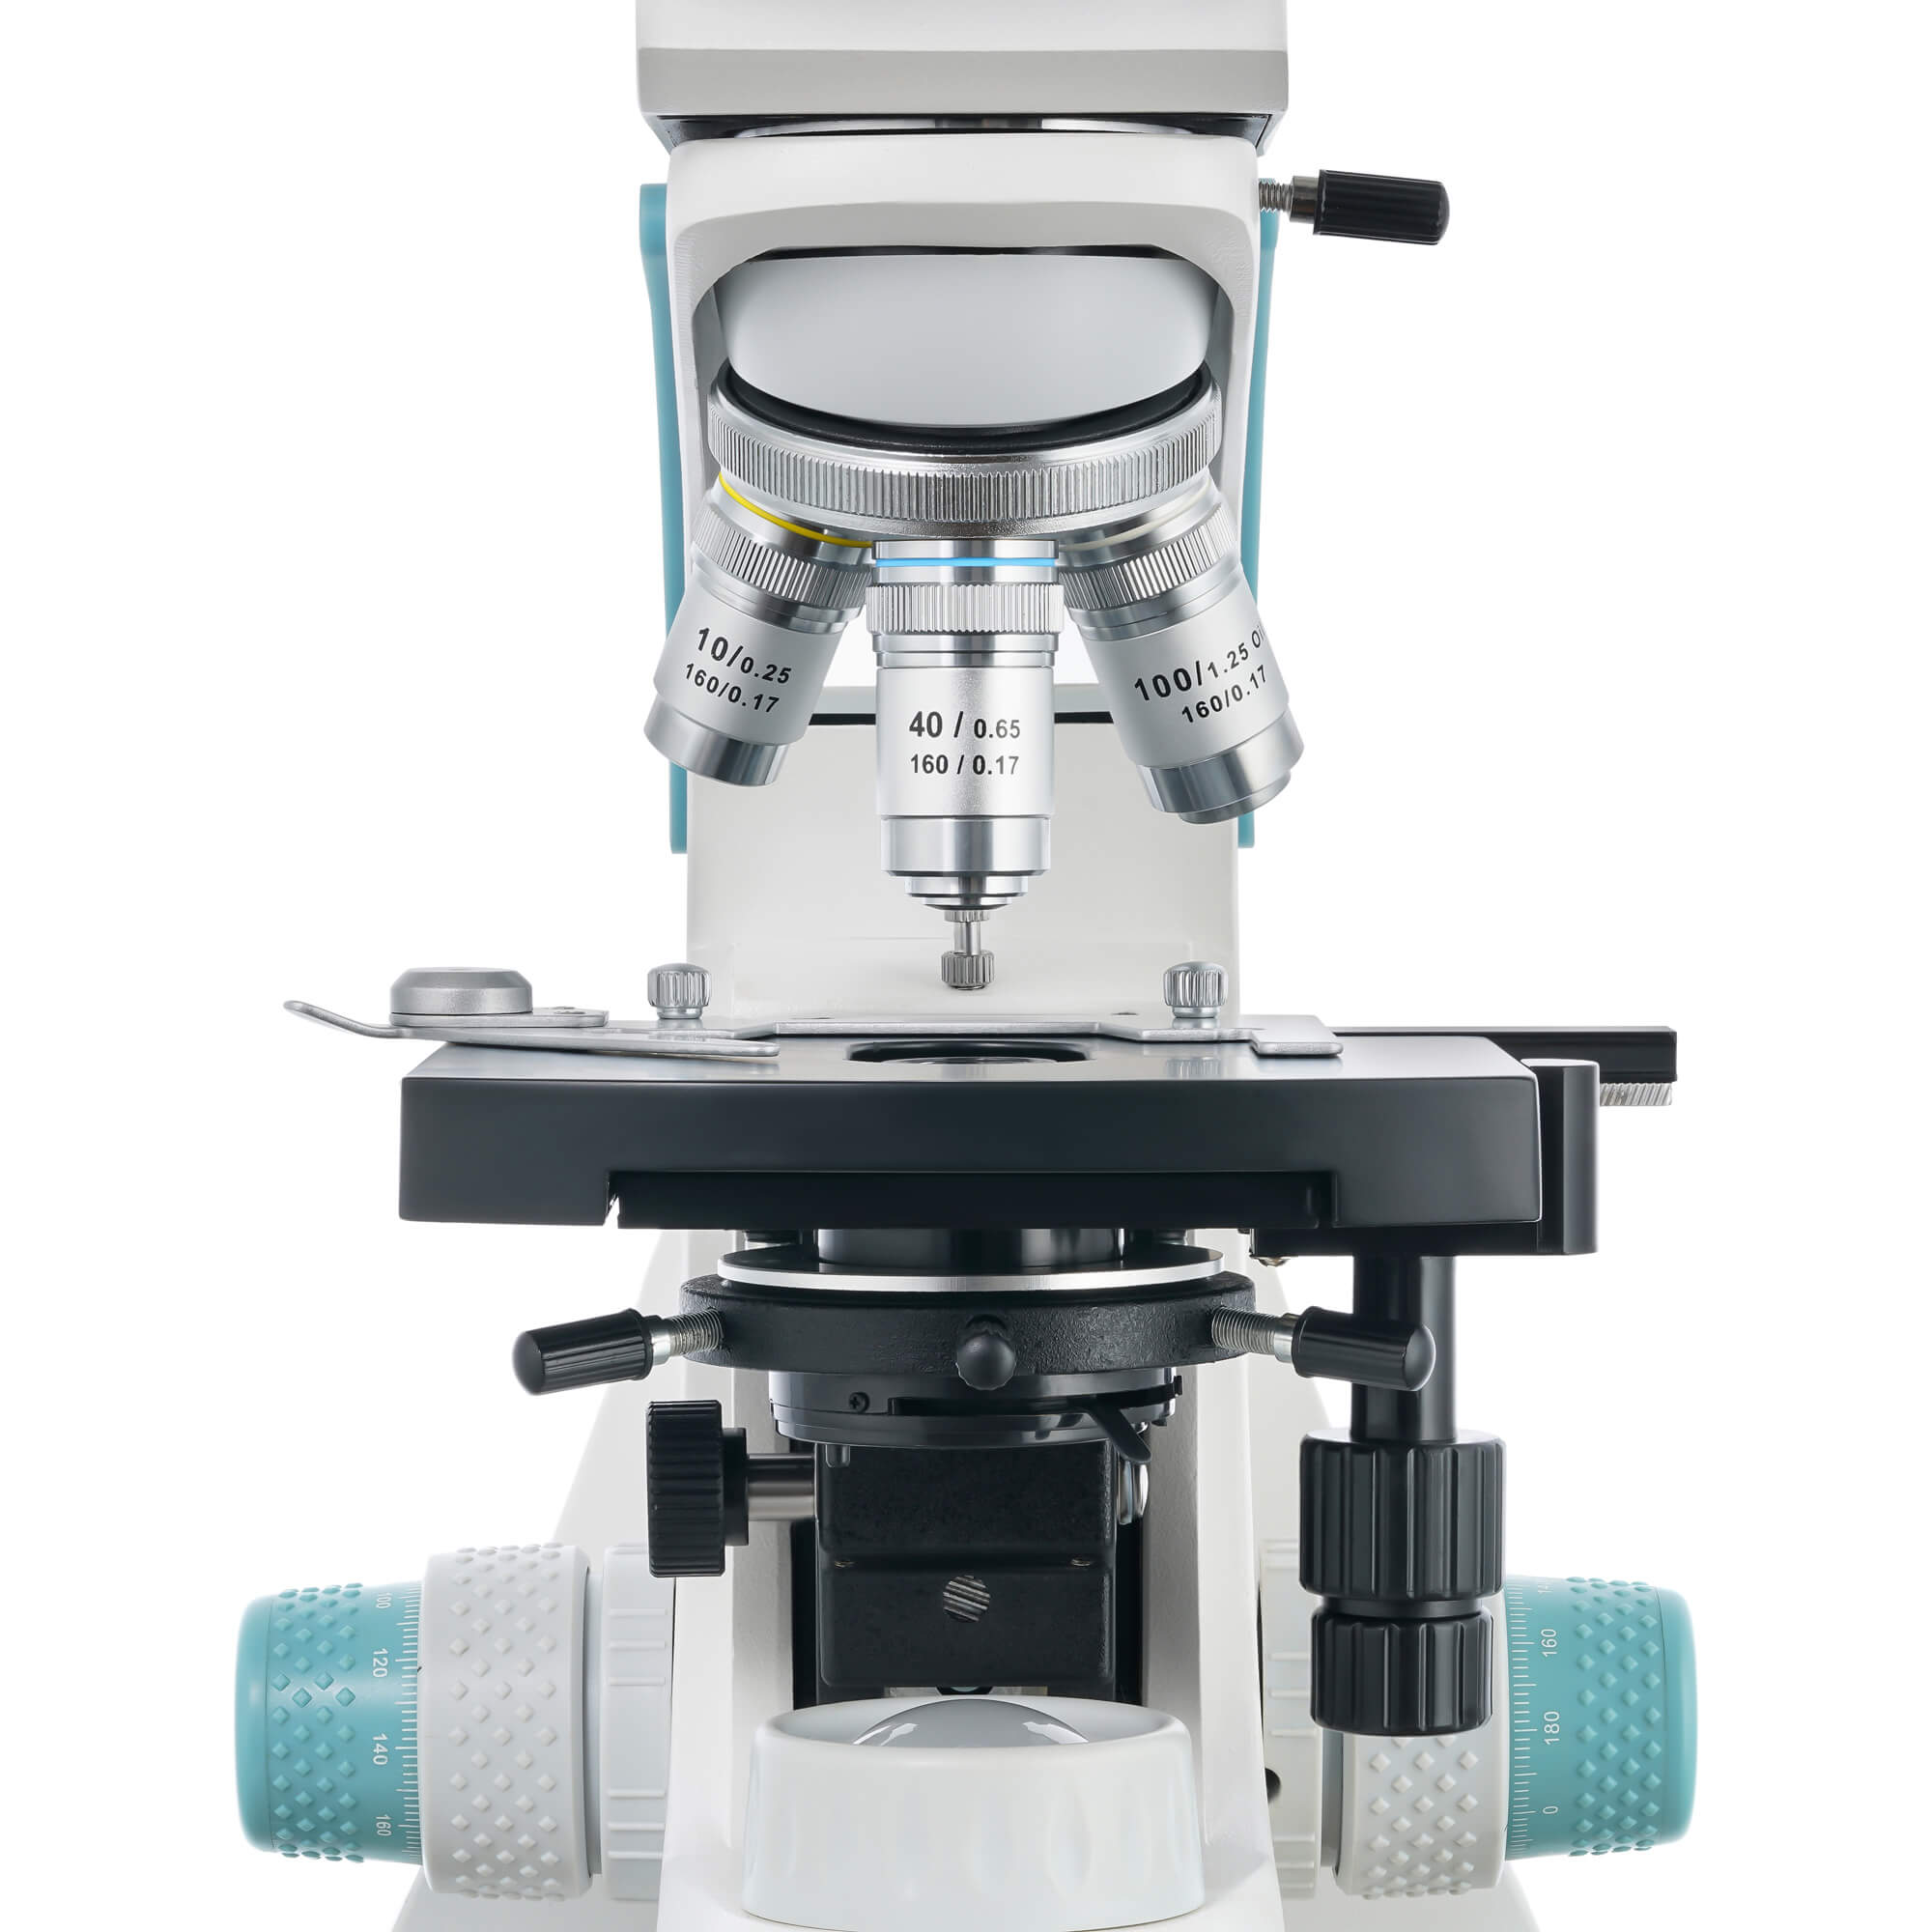 Digitálny trinokulárny mikroskop Levenhuk D900T